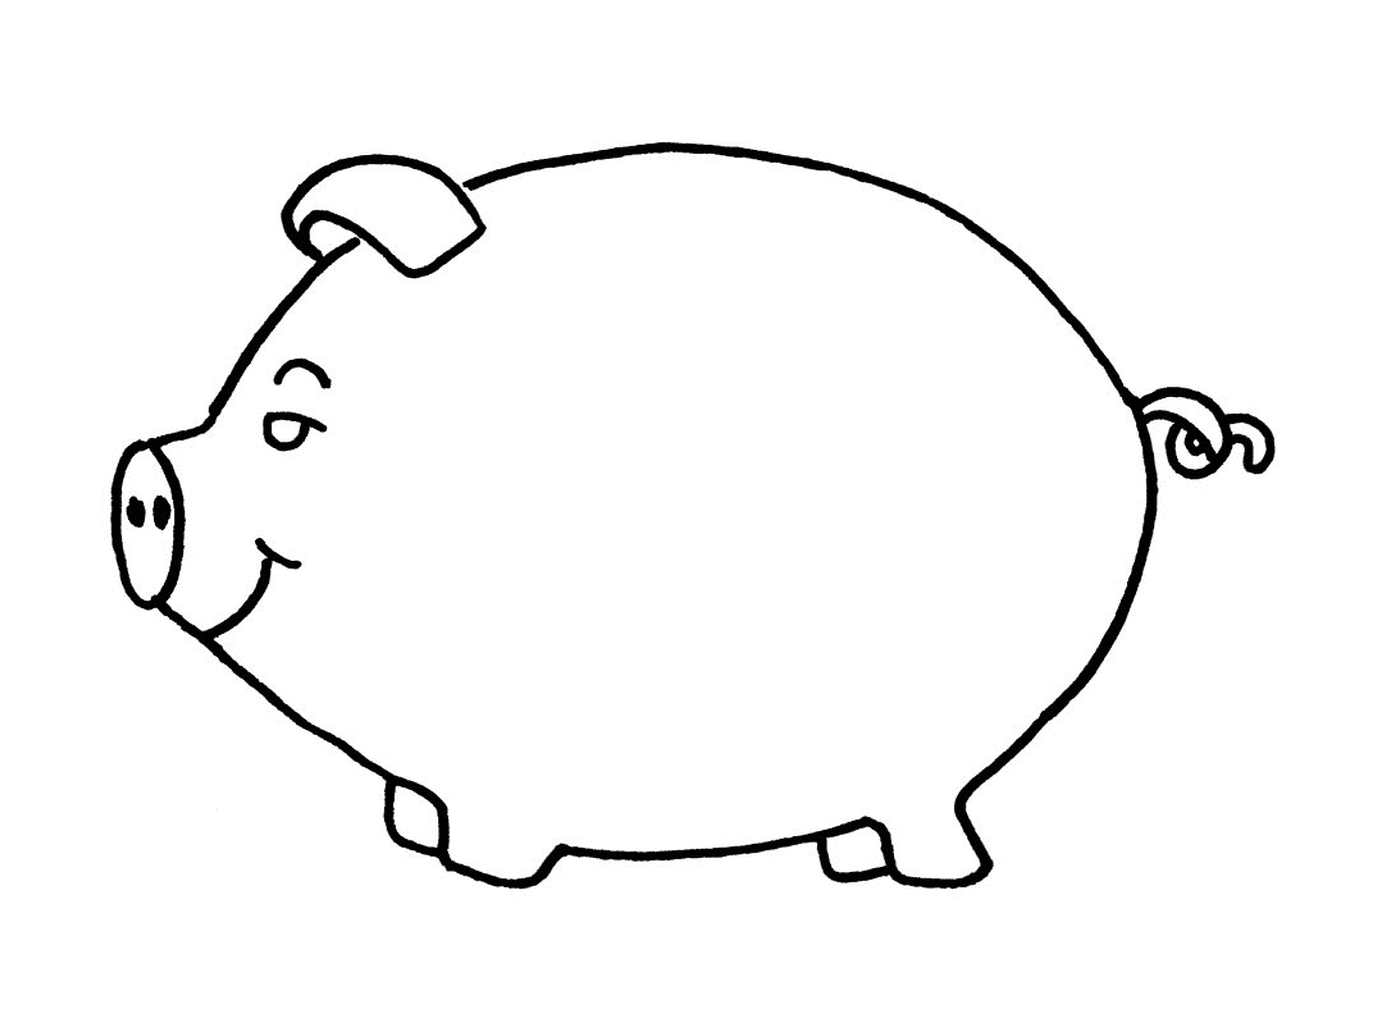  Un salvadanaio a forma di maiale 